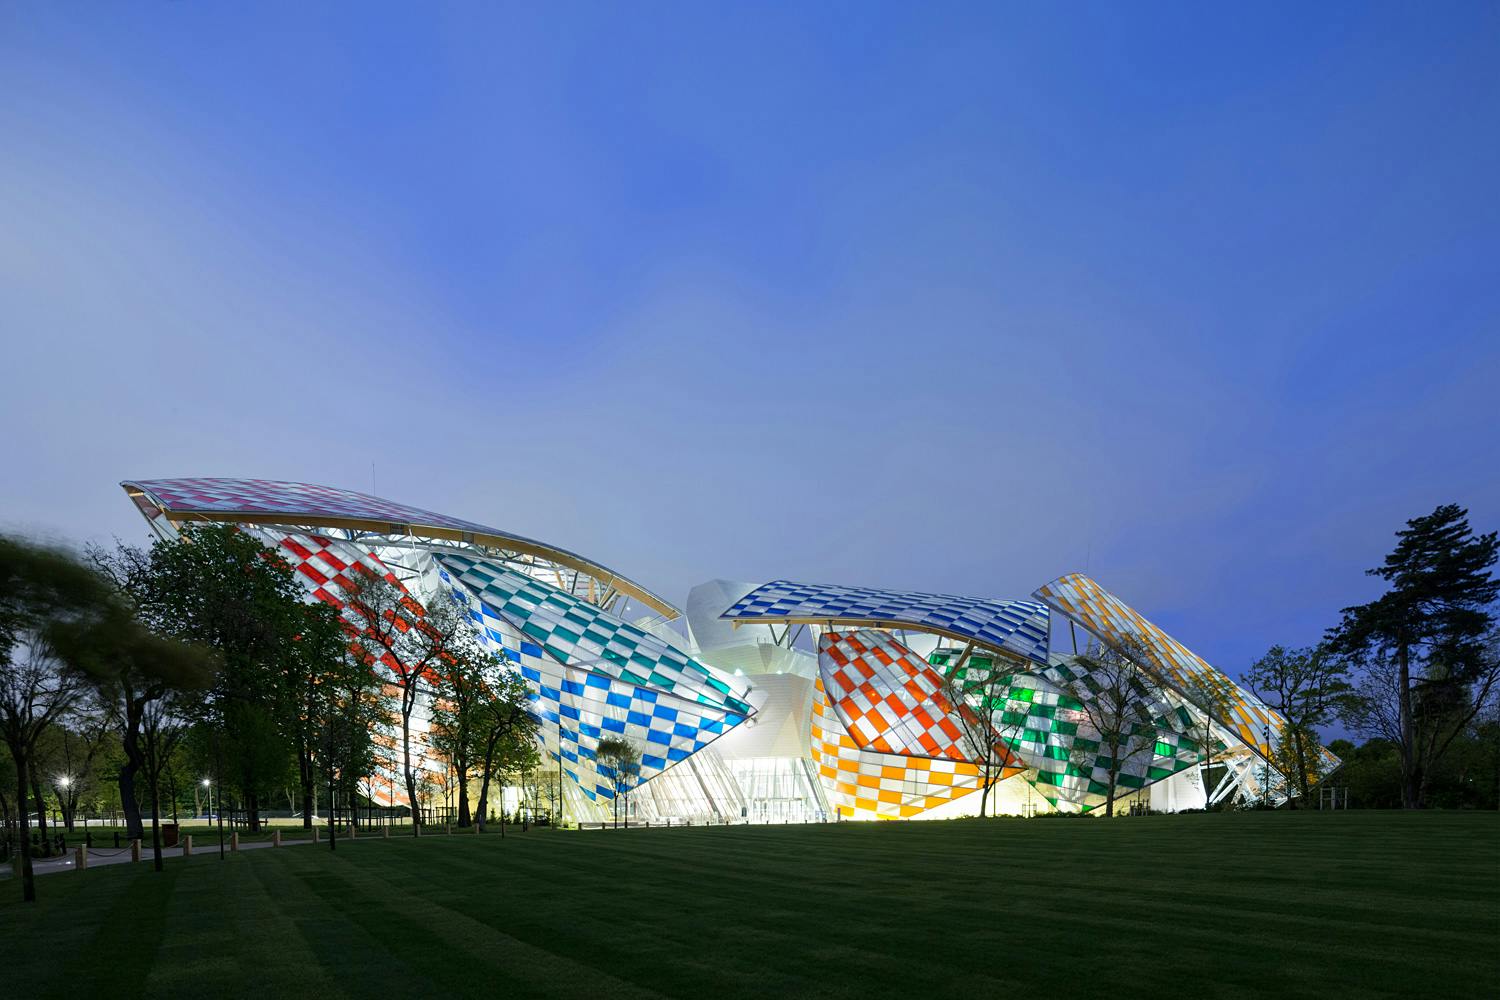 A closer look at Daniel Buren's colorful intervention at the Fondation  Louis Vuitton